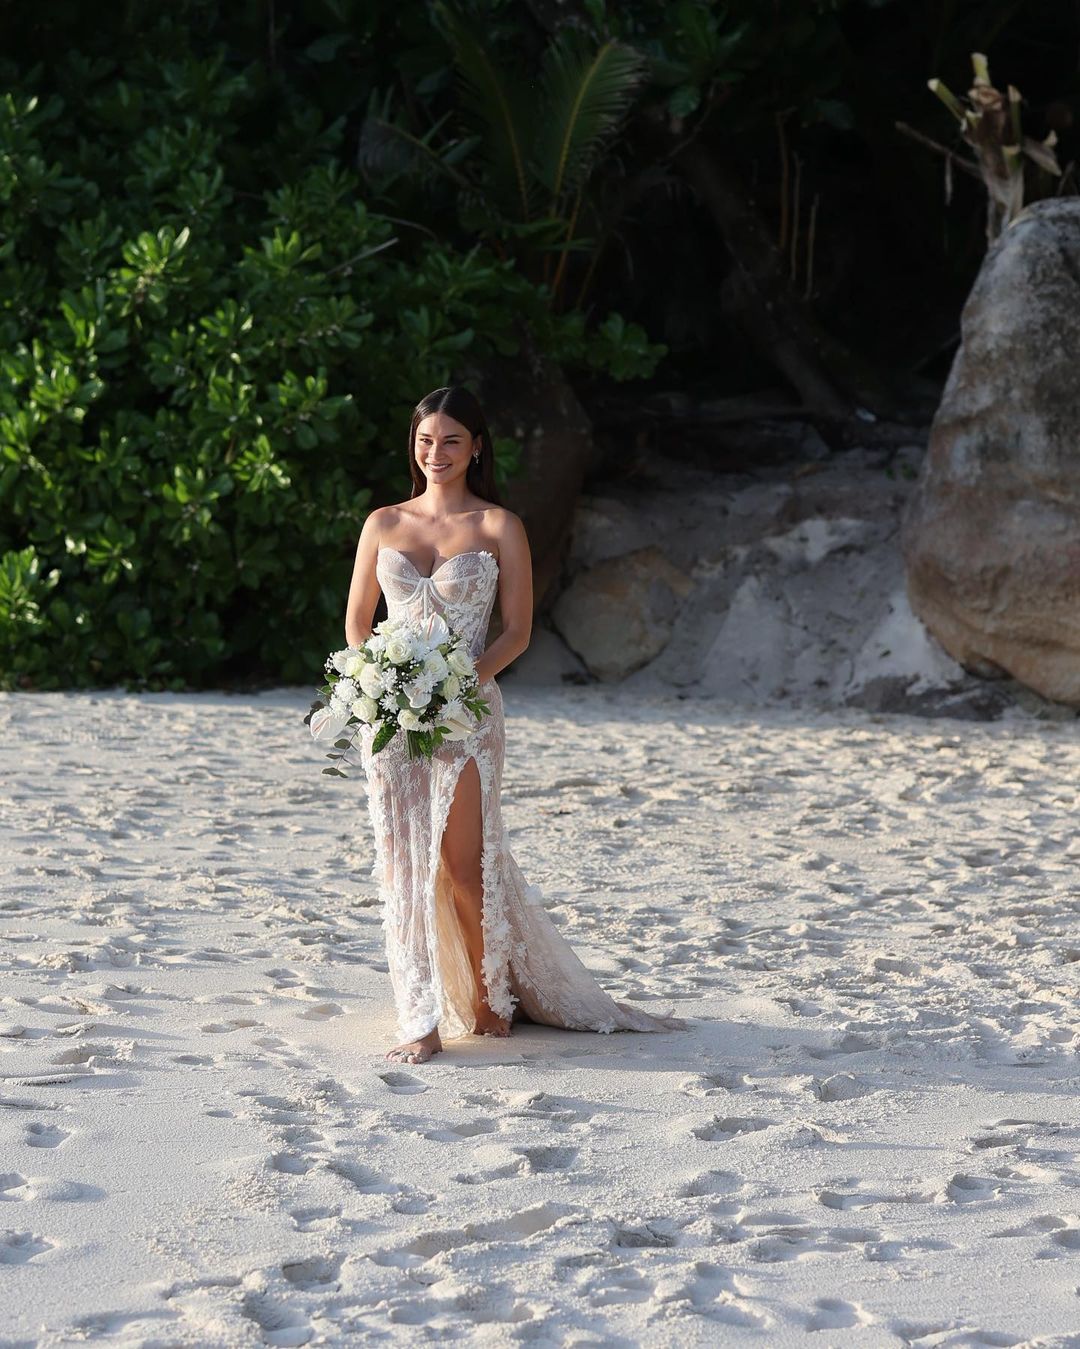 Pia Wurtzbach in her wedding gown walking down the beach at North Island, Seychelles